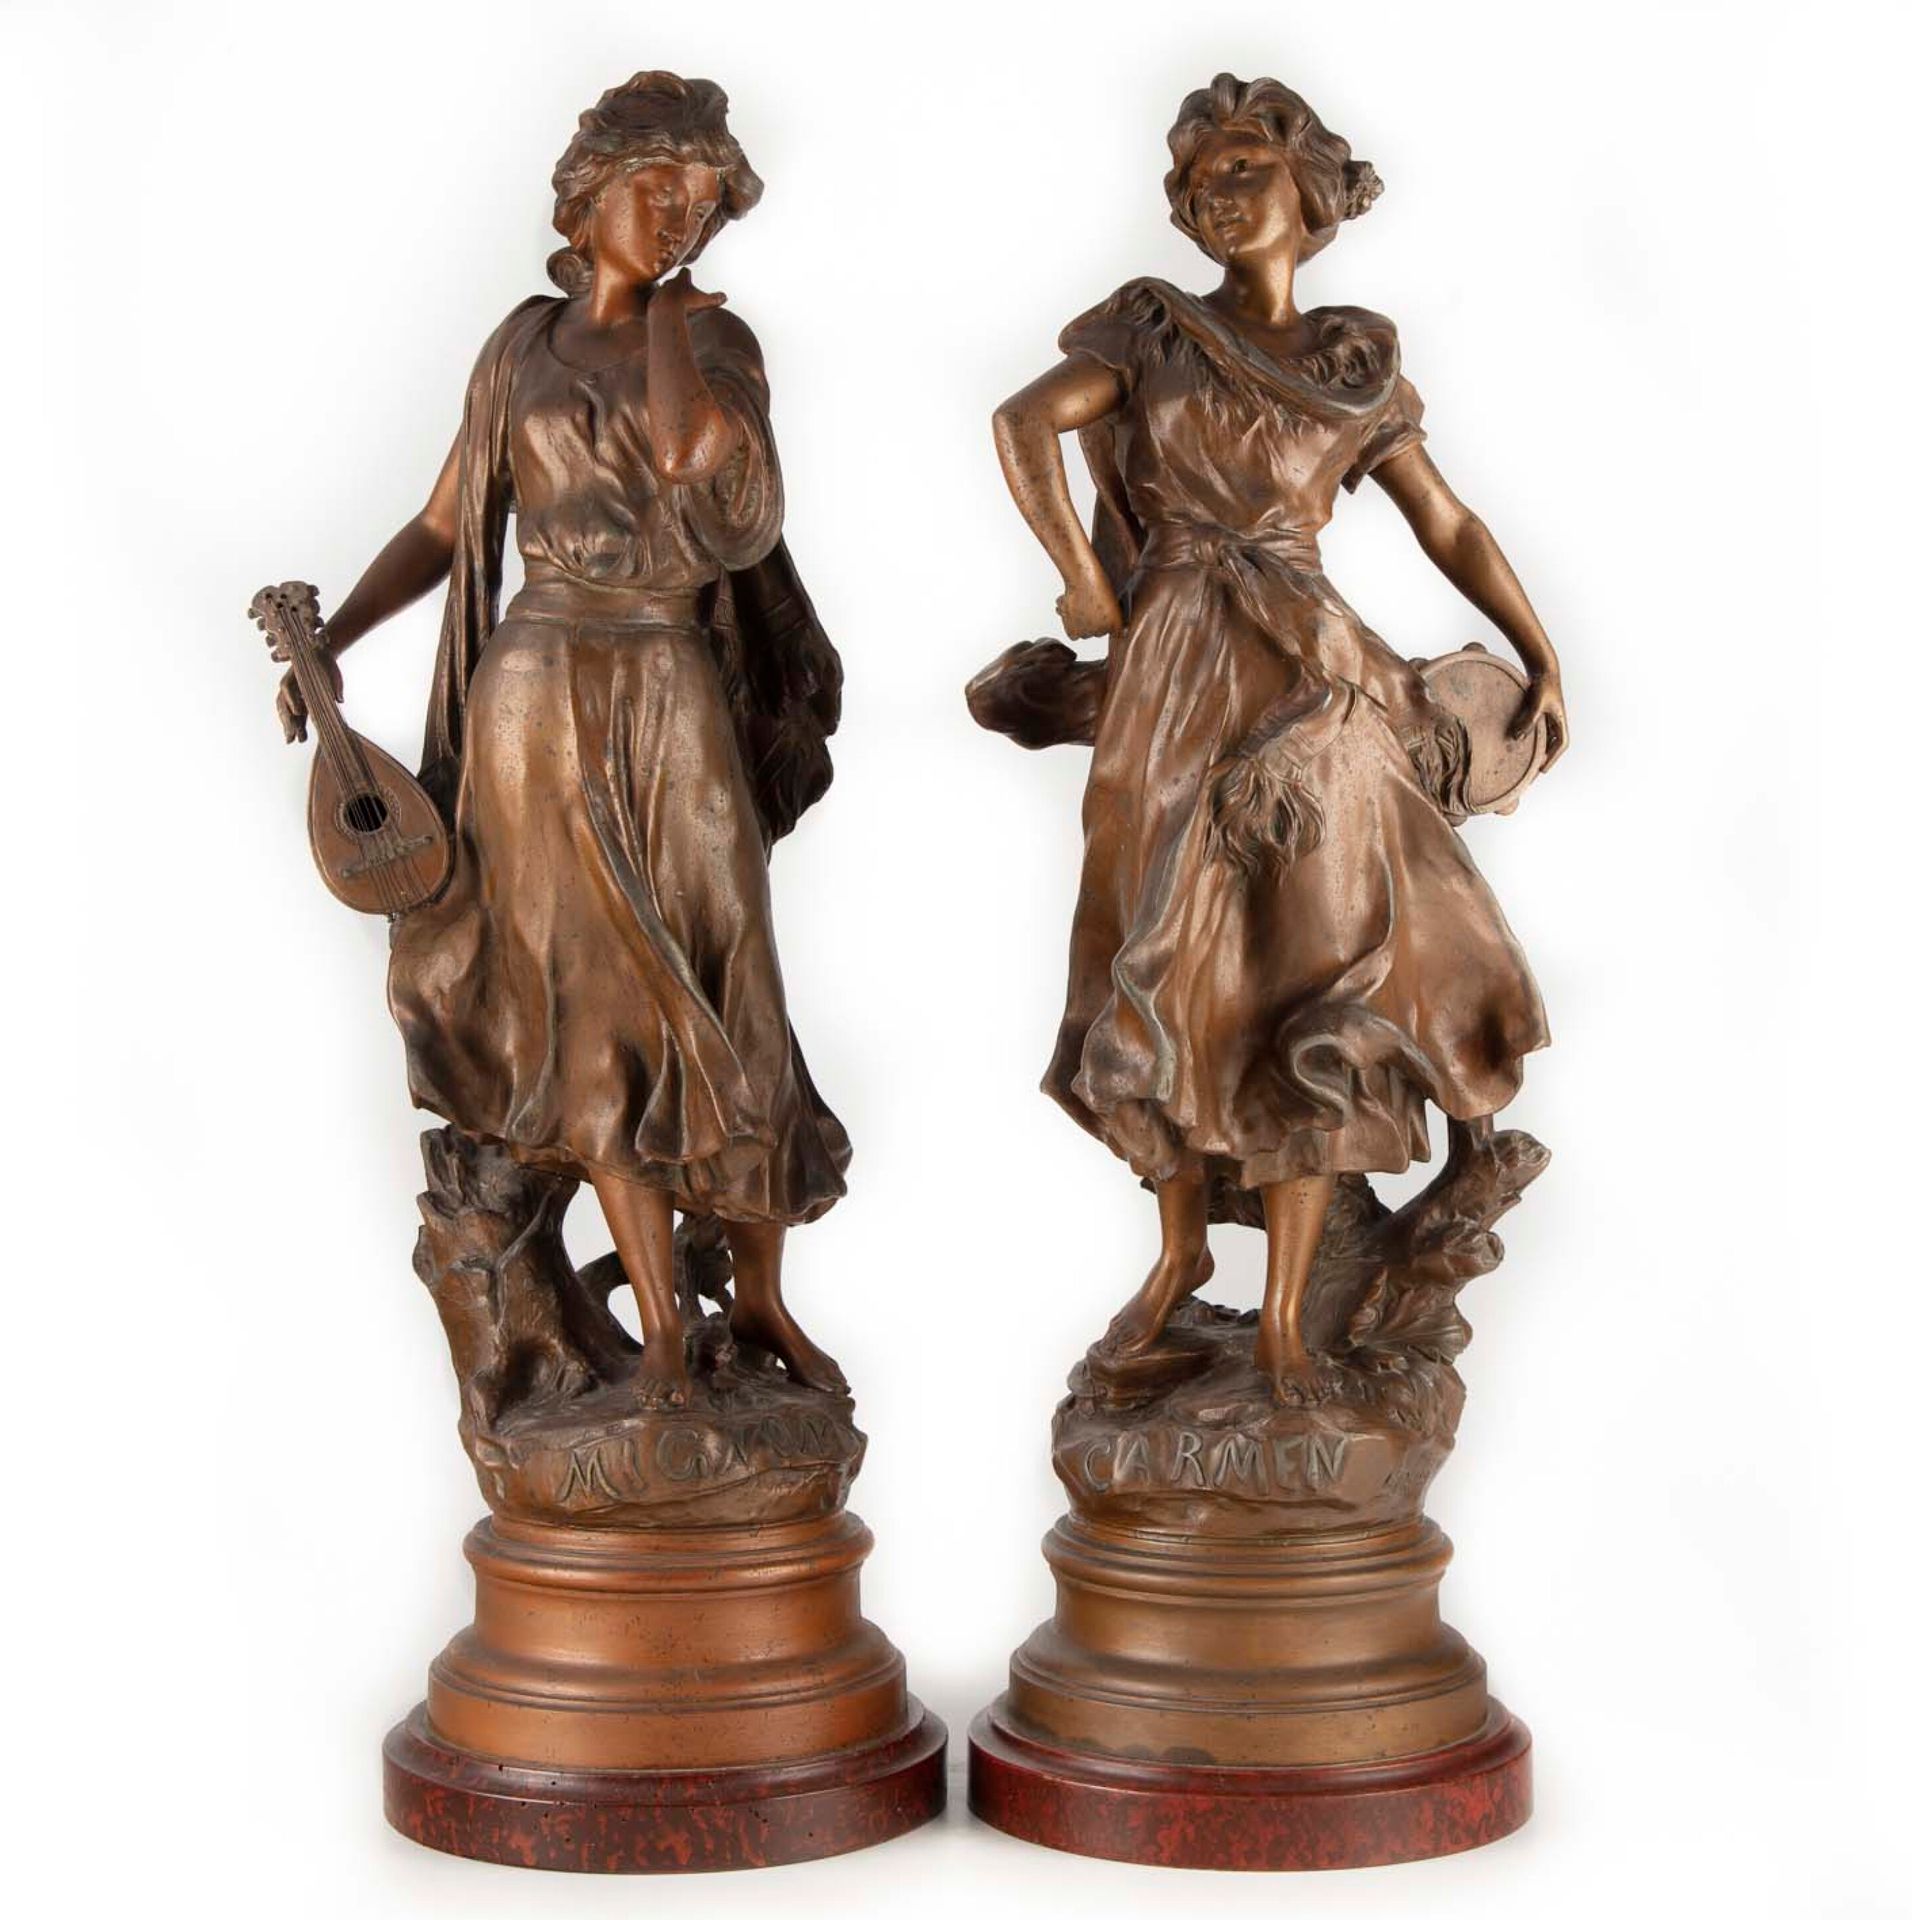 LUCA MADRASSI 卢卡-马德拉西 (1848 - 1919 )

卡门和米尼翁

一对带有棕色铜锈的雷古拉雕塑

19世纪

H.60厘米